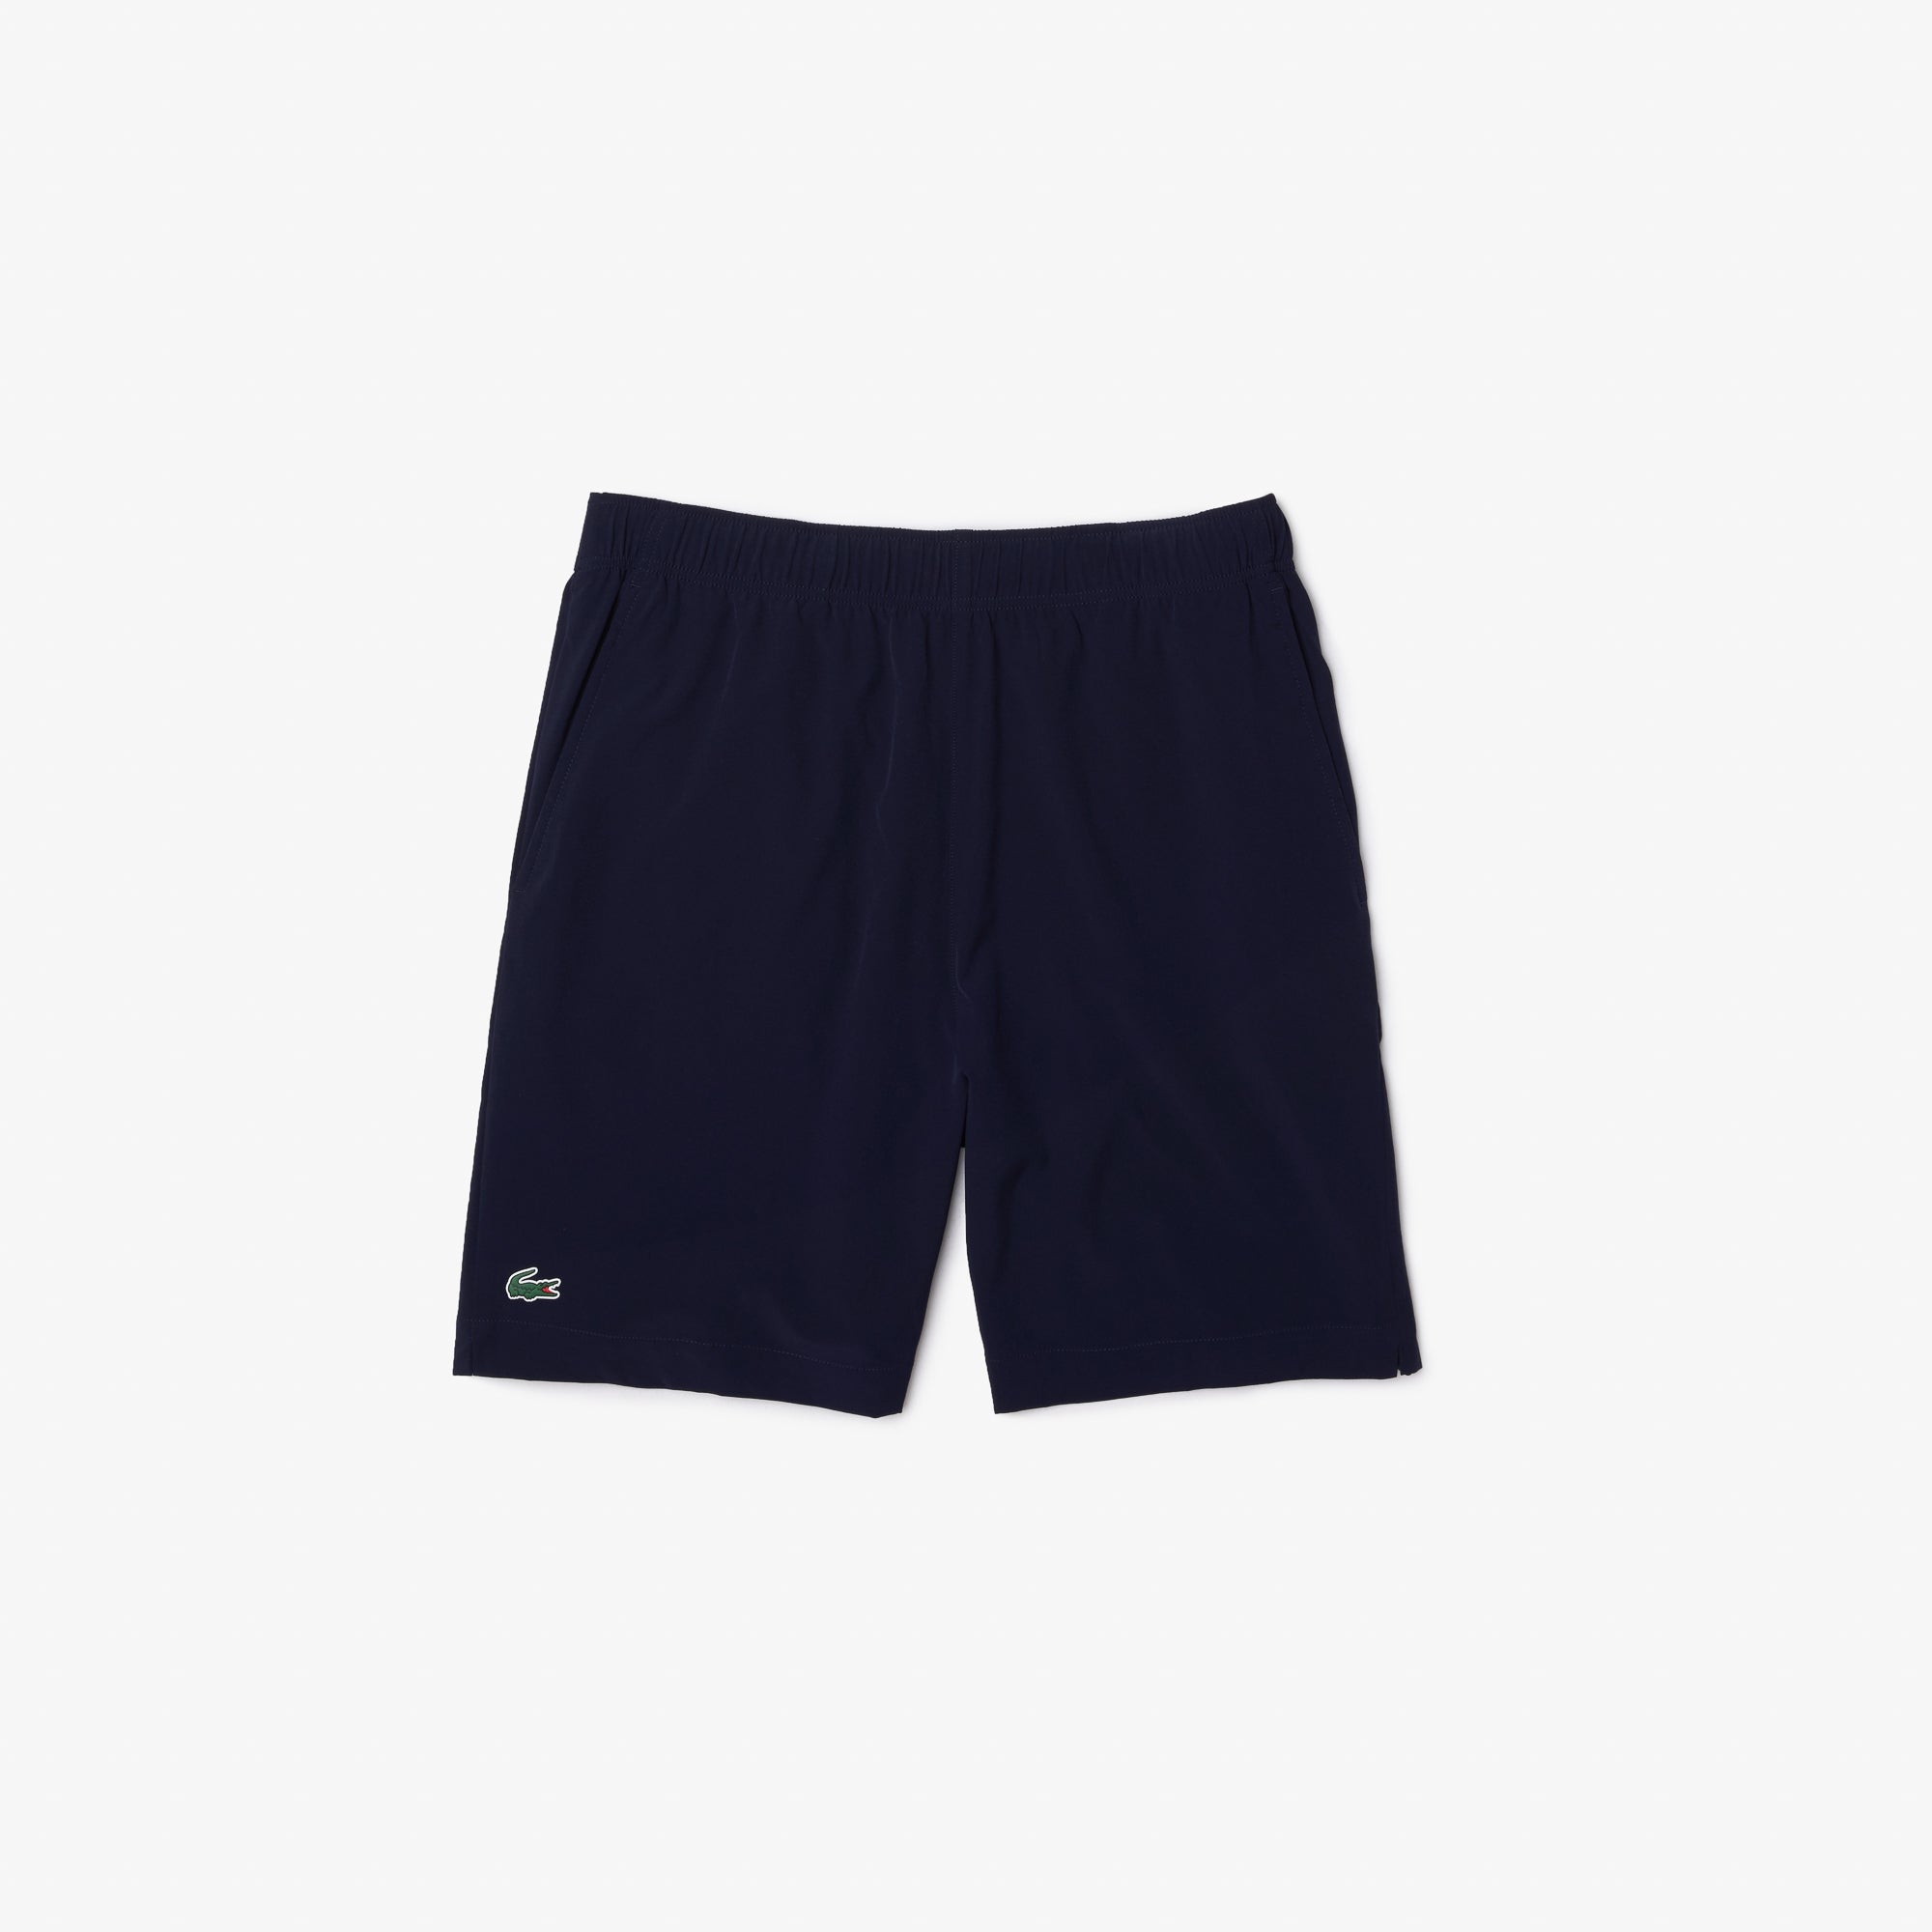 Lacoste Shorts (Navy) - L